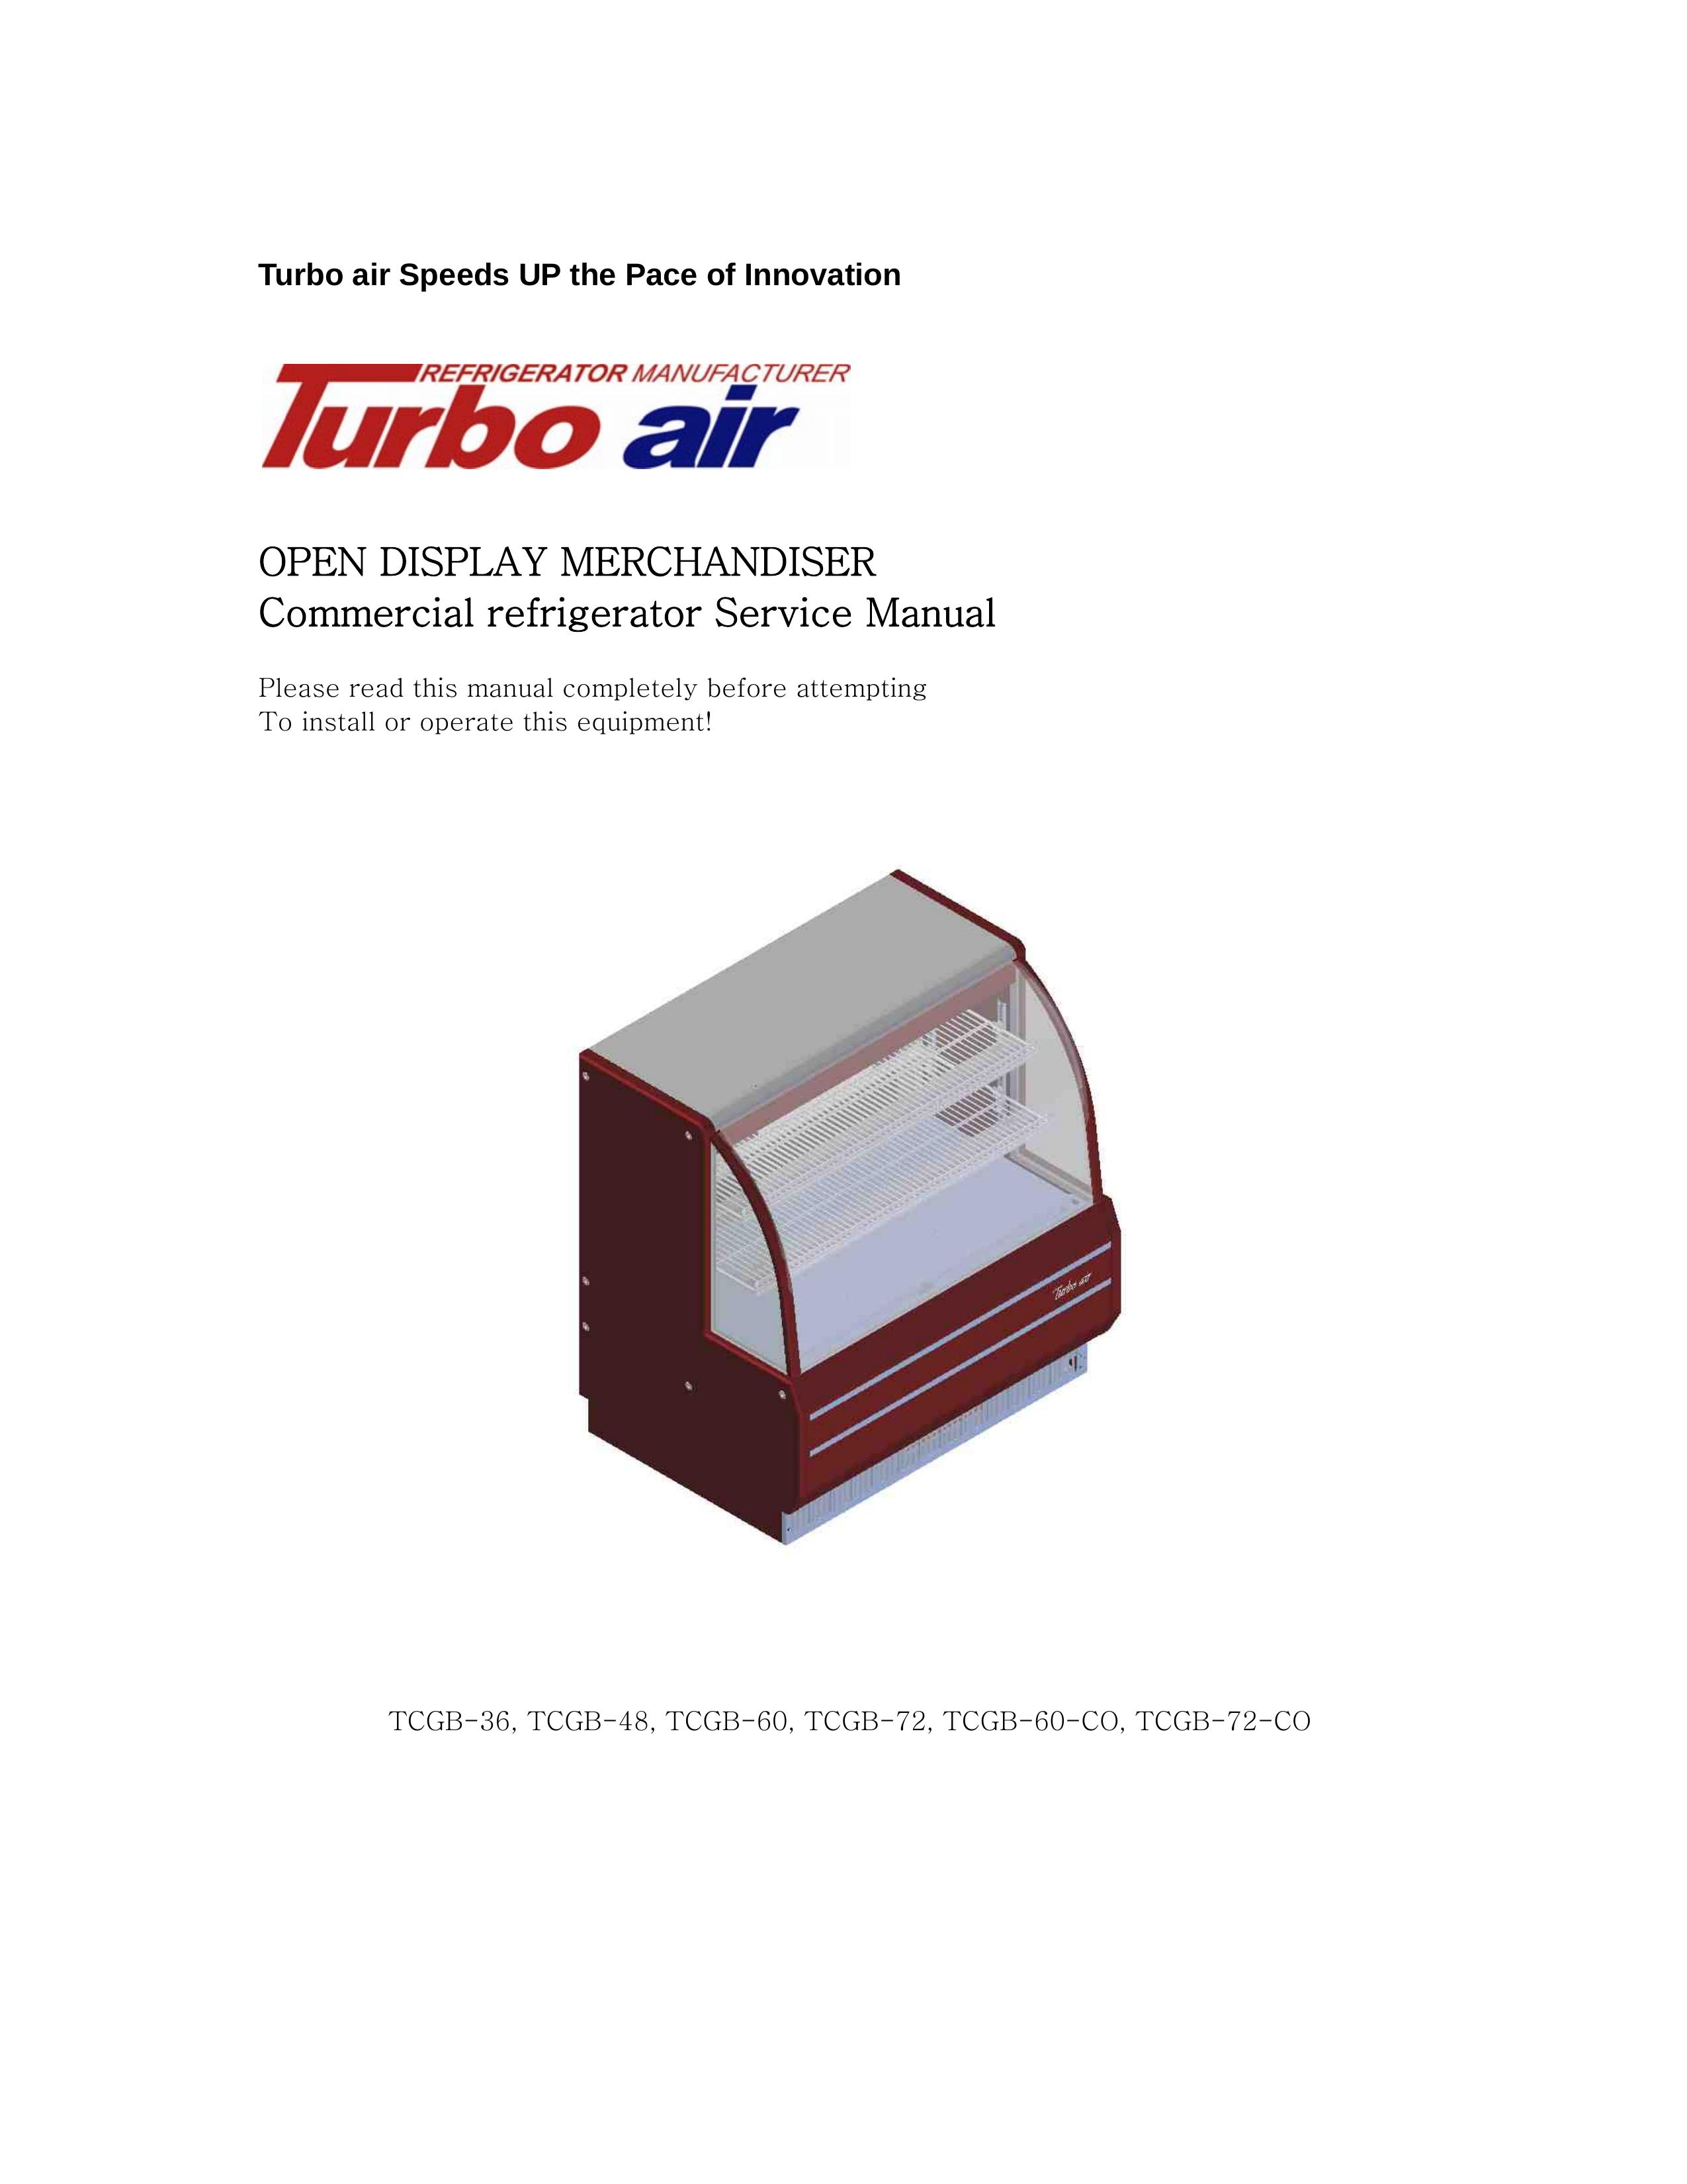 Turbo Air TCGB-72 Refrigerator User Manual